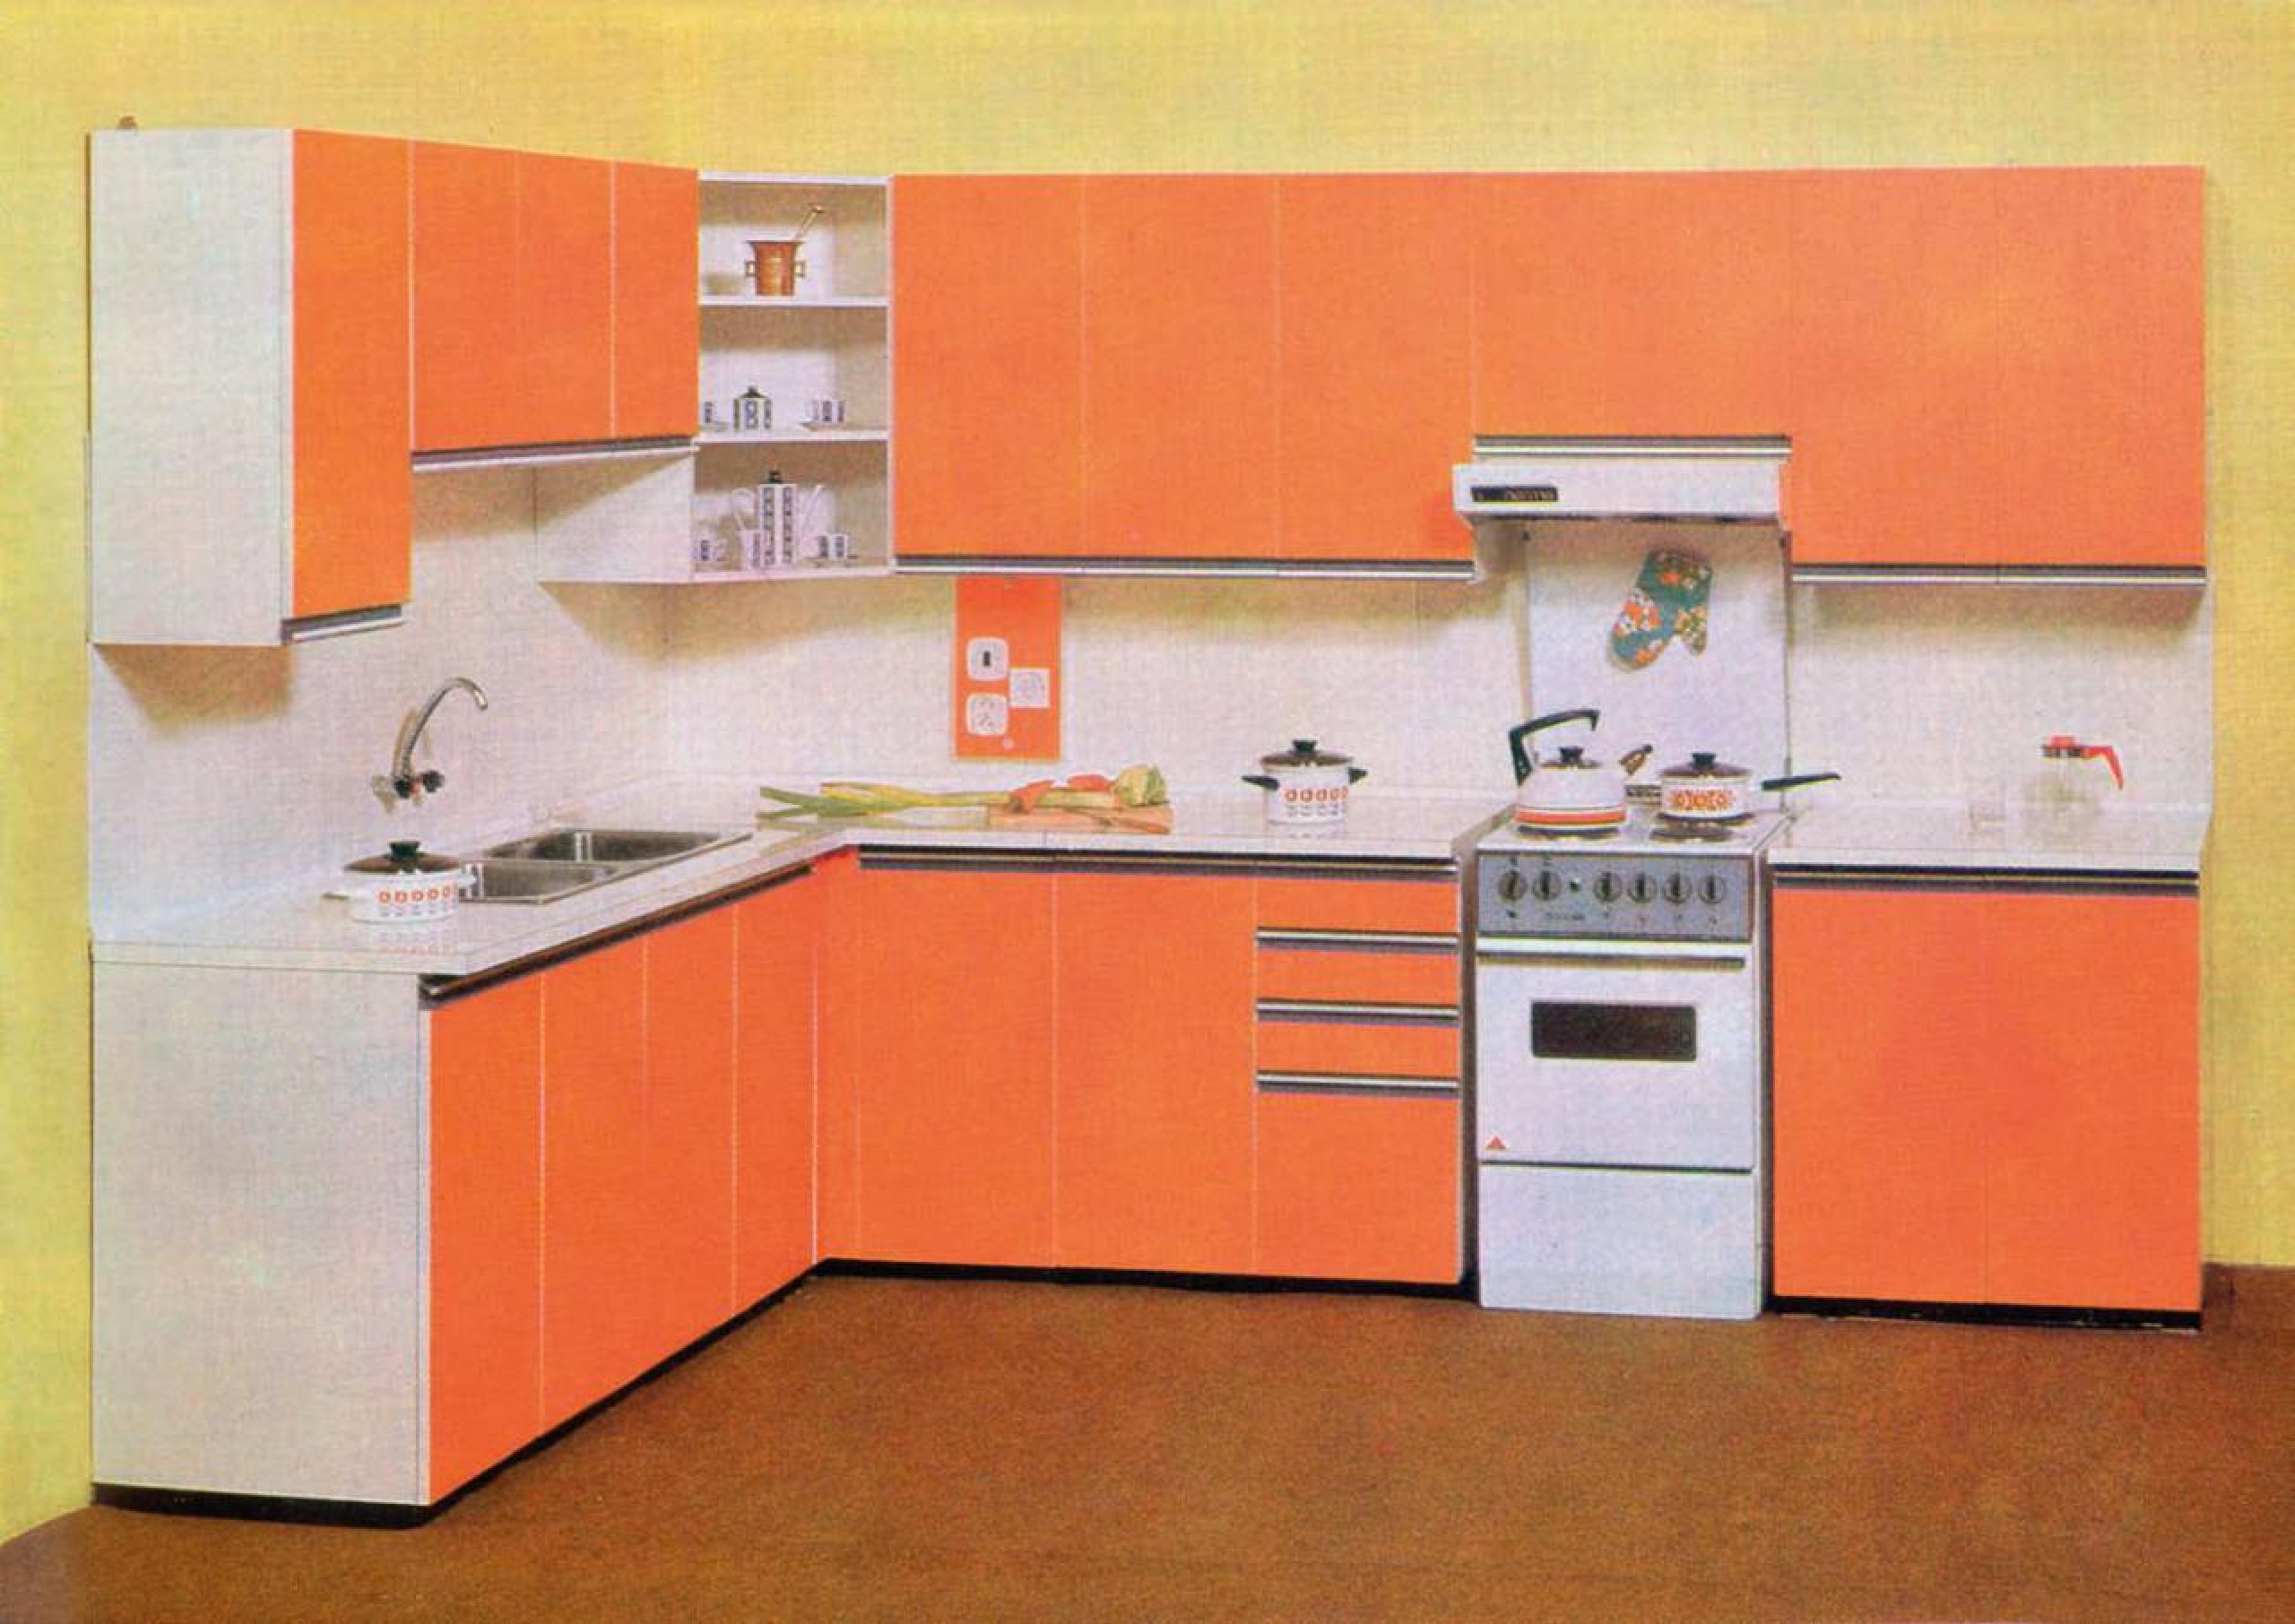 Kuchyňská linka Astra z roku 1975